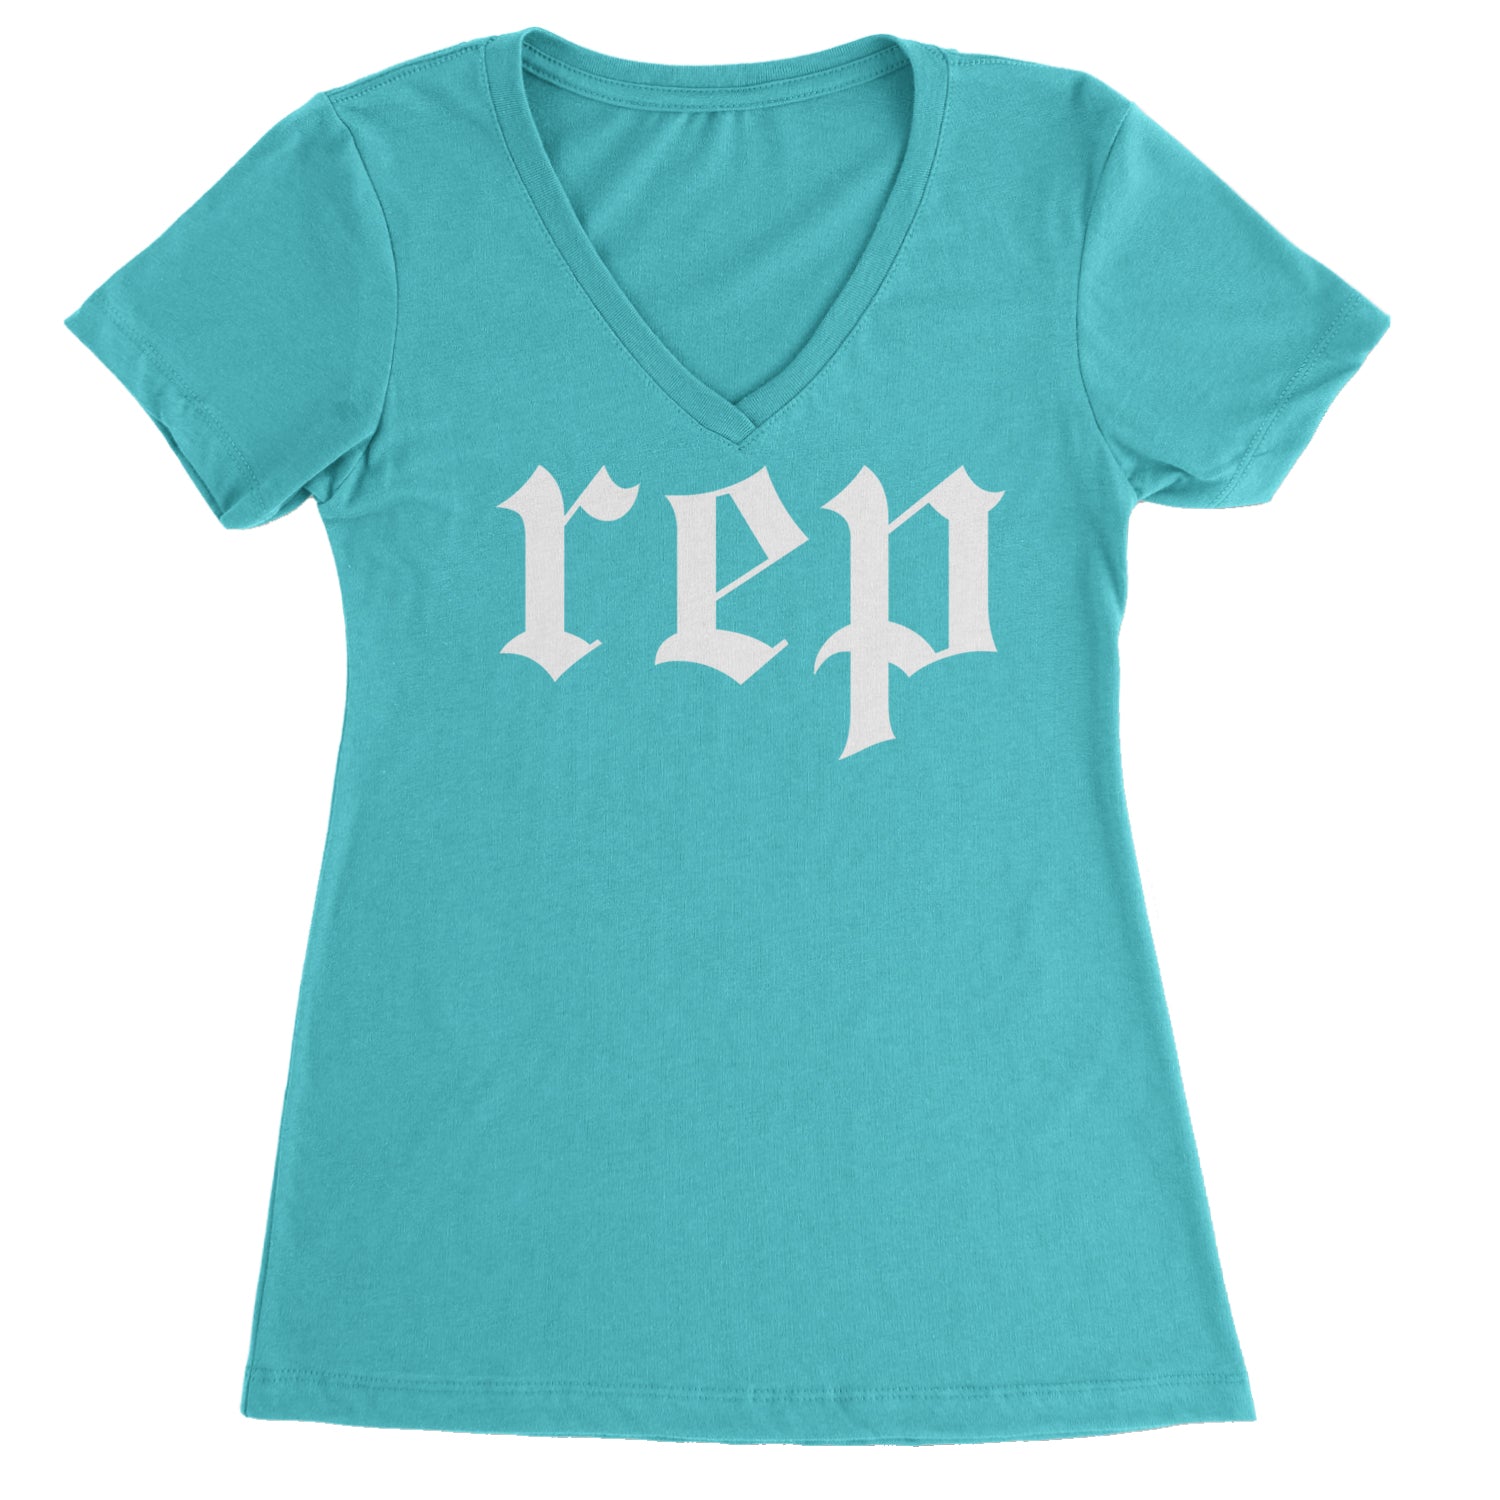 REP Reputation Eras Music Lover Gift Fan Favorite Ladies V-Neck T-shirt Surf